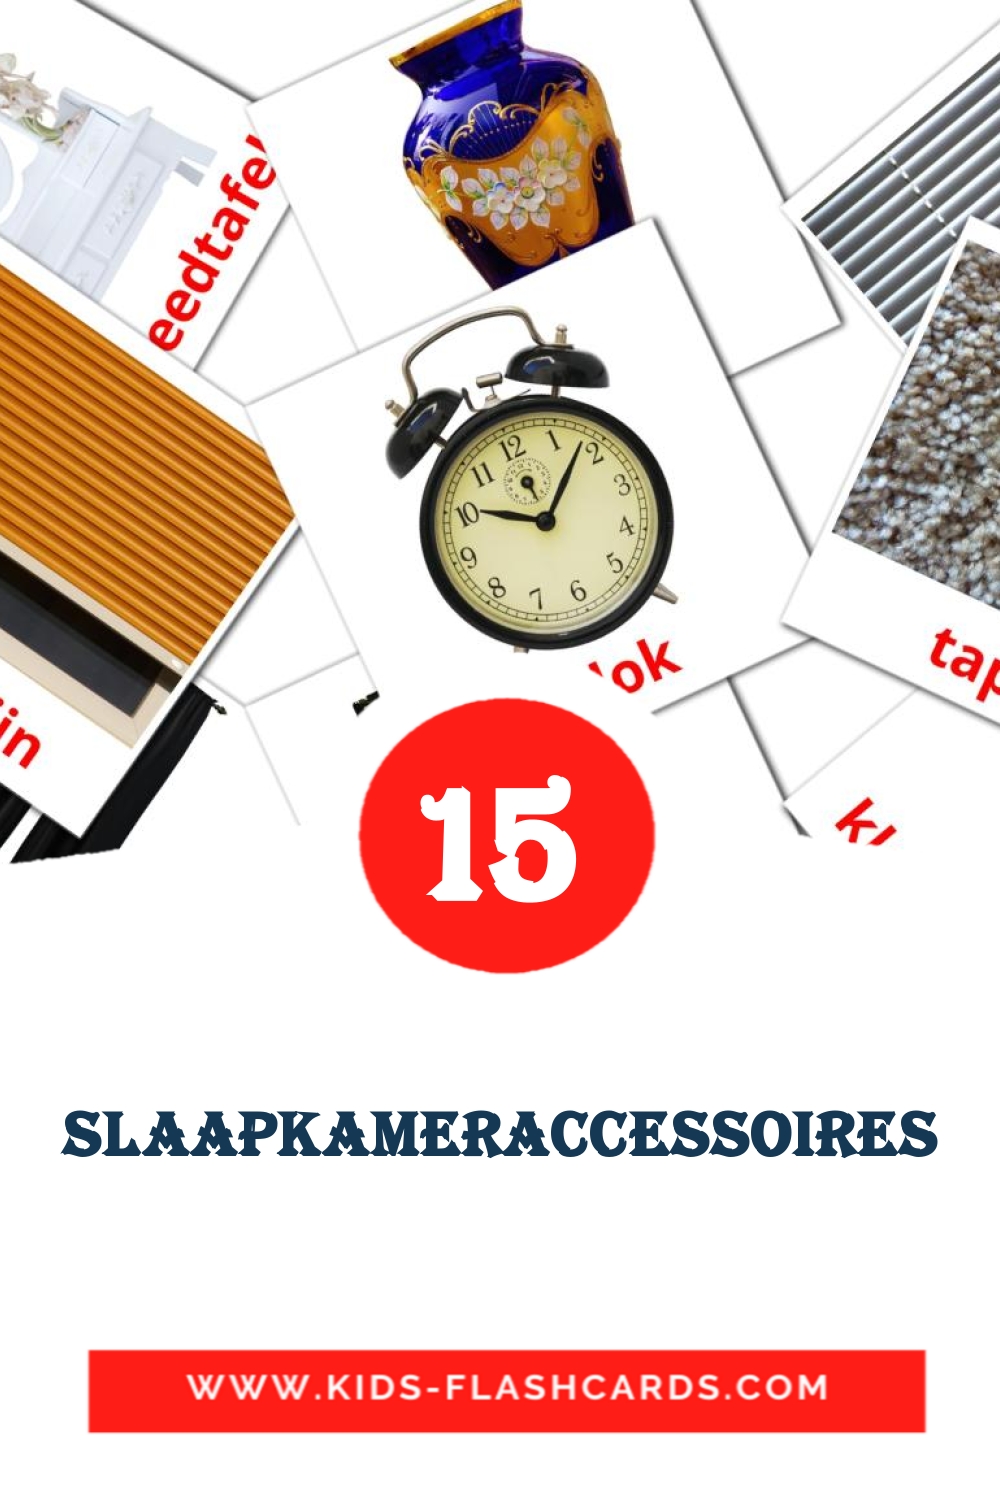 18 Slaapkameraccessoires Picture Cards for Kindergarden in dutch